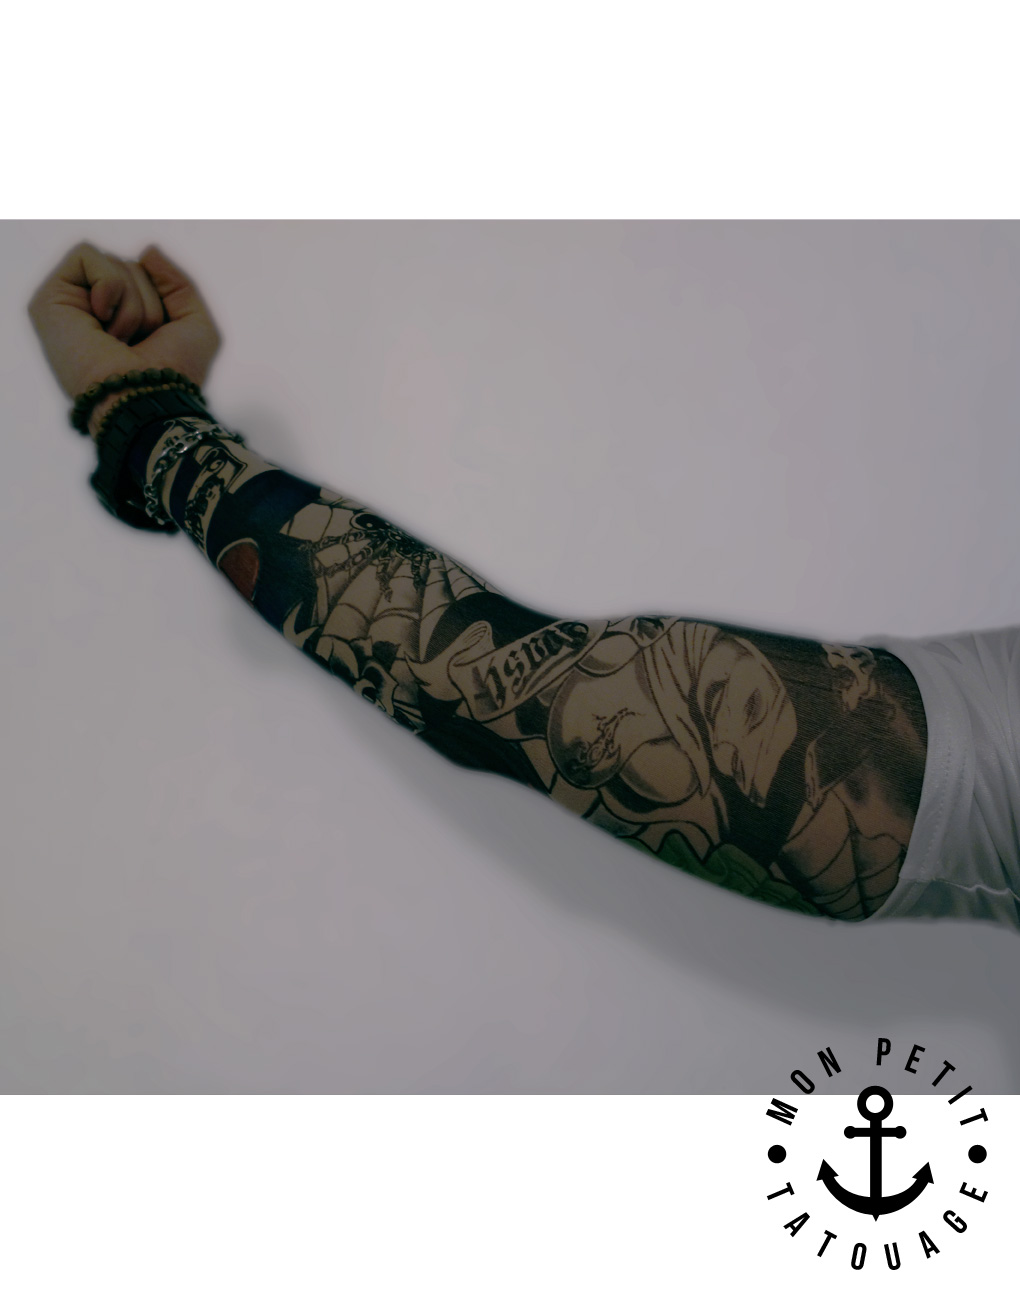 tatouage manchette femme dotwork par Saumon cru Tarawa Cap d'Agde - Tarawa  Studio Tattoo Piercing